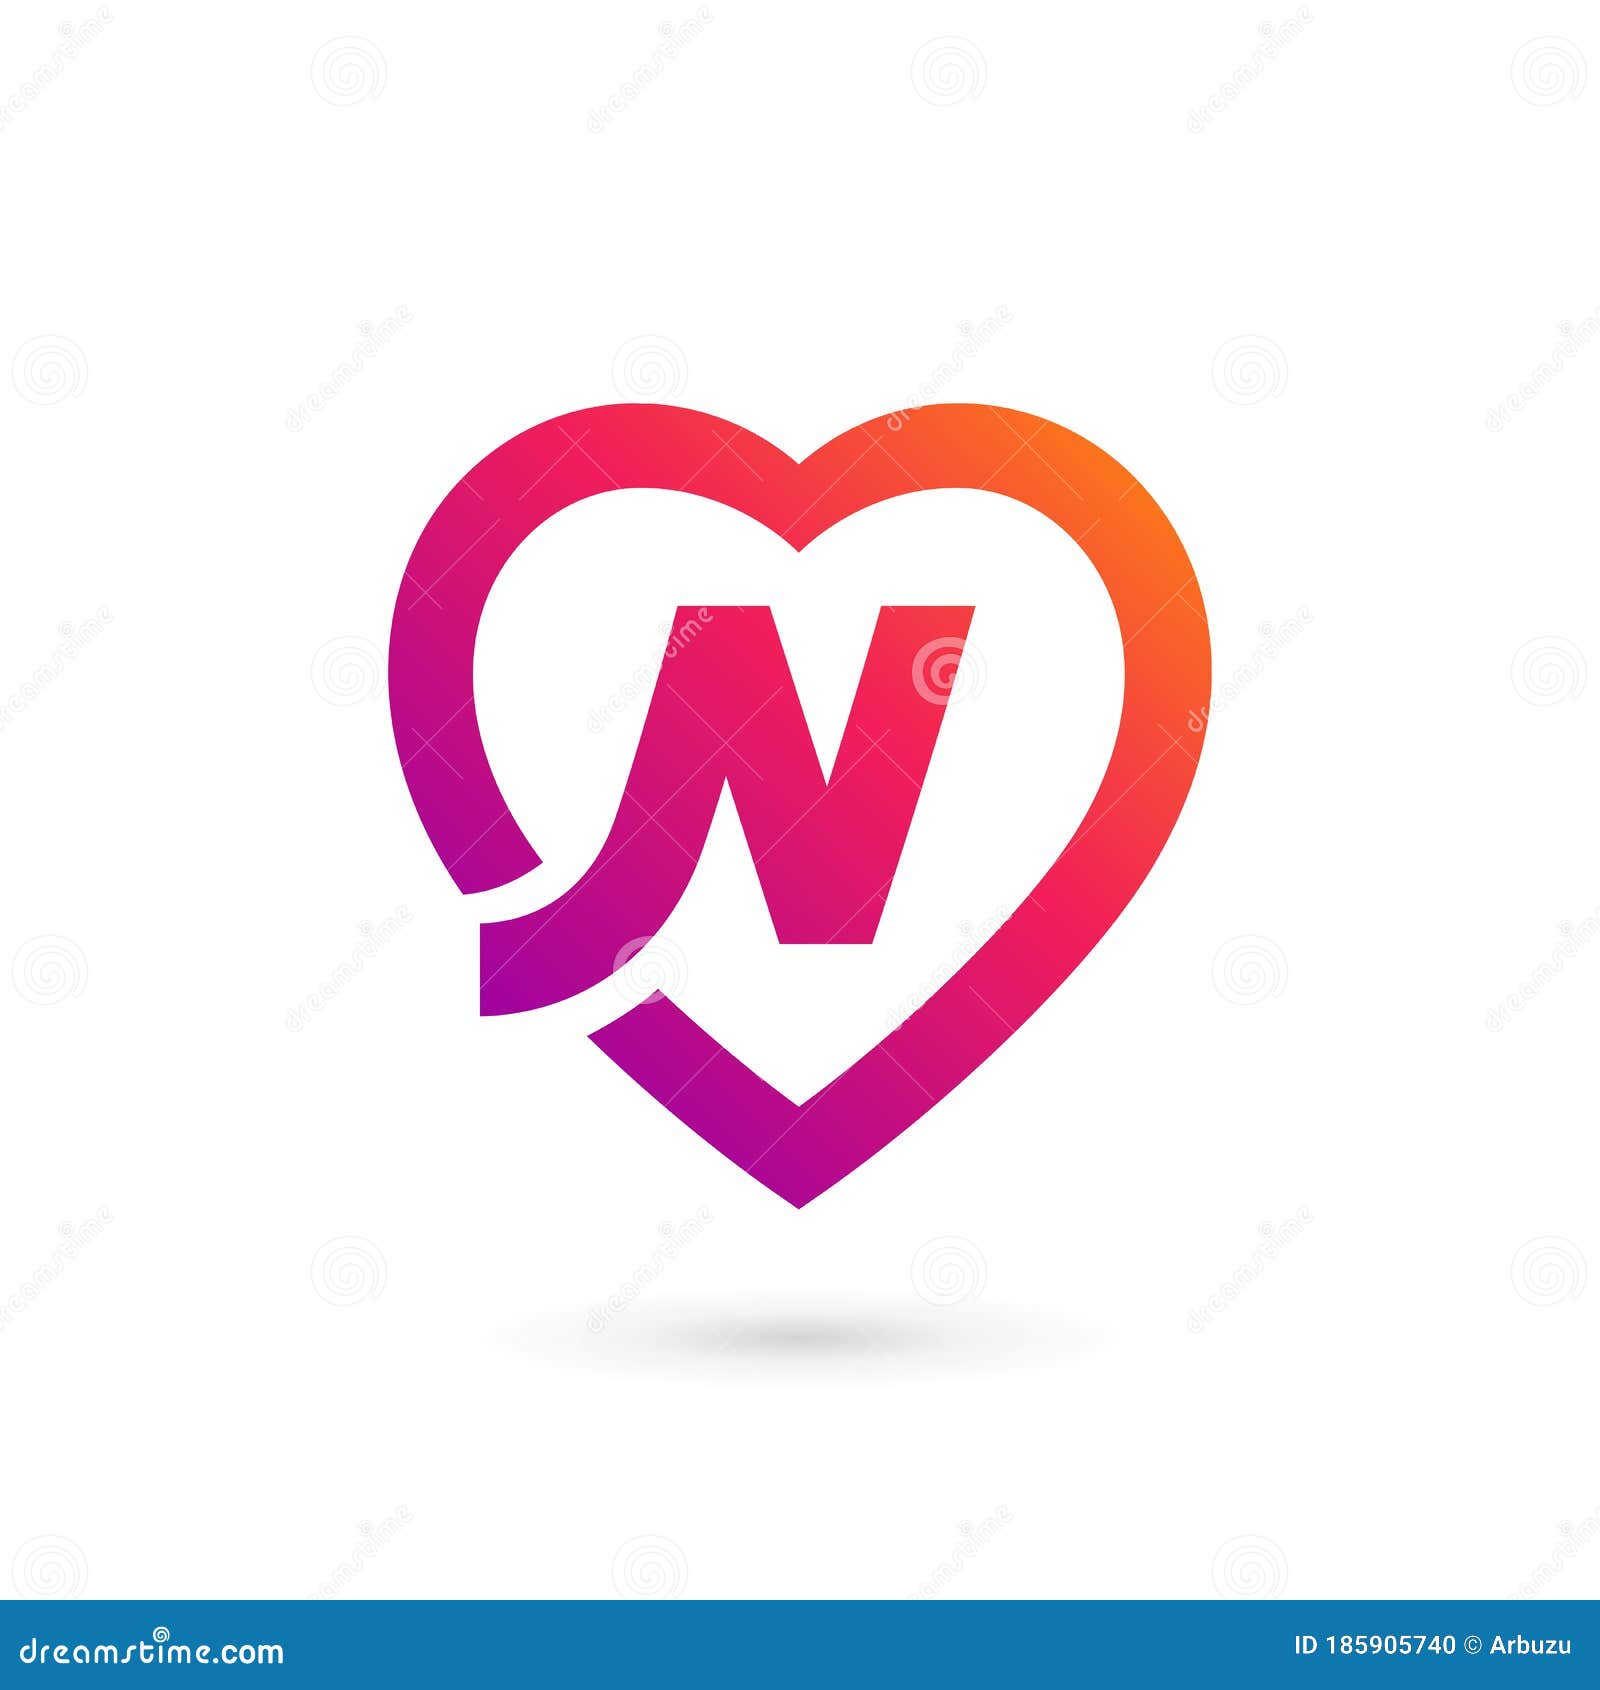 Letter V heart symbol logo icon design template elements Stock